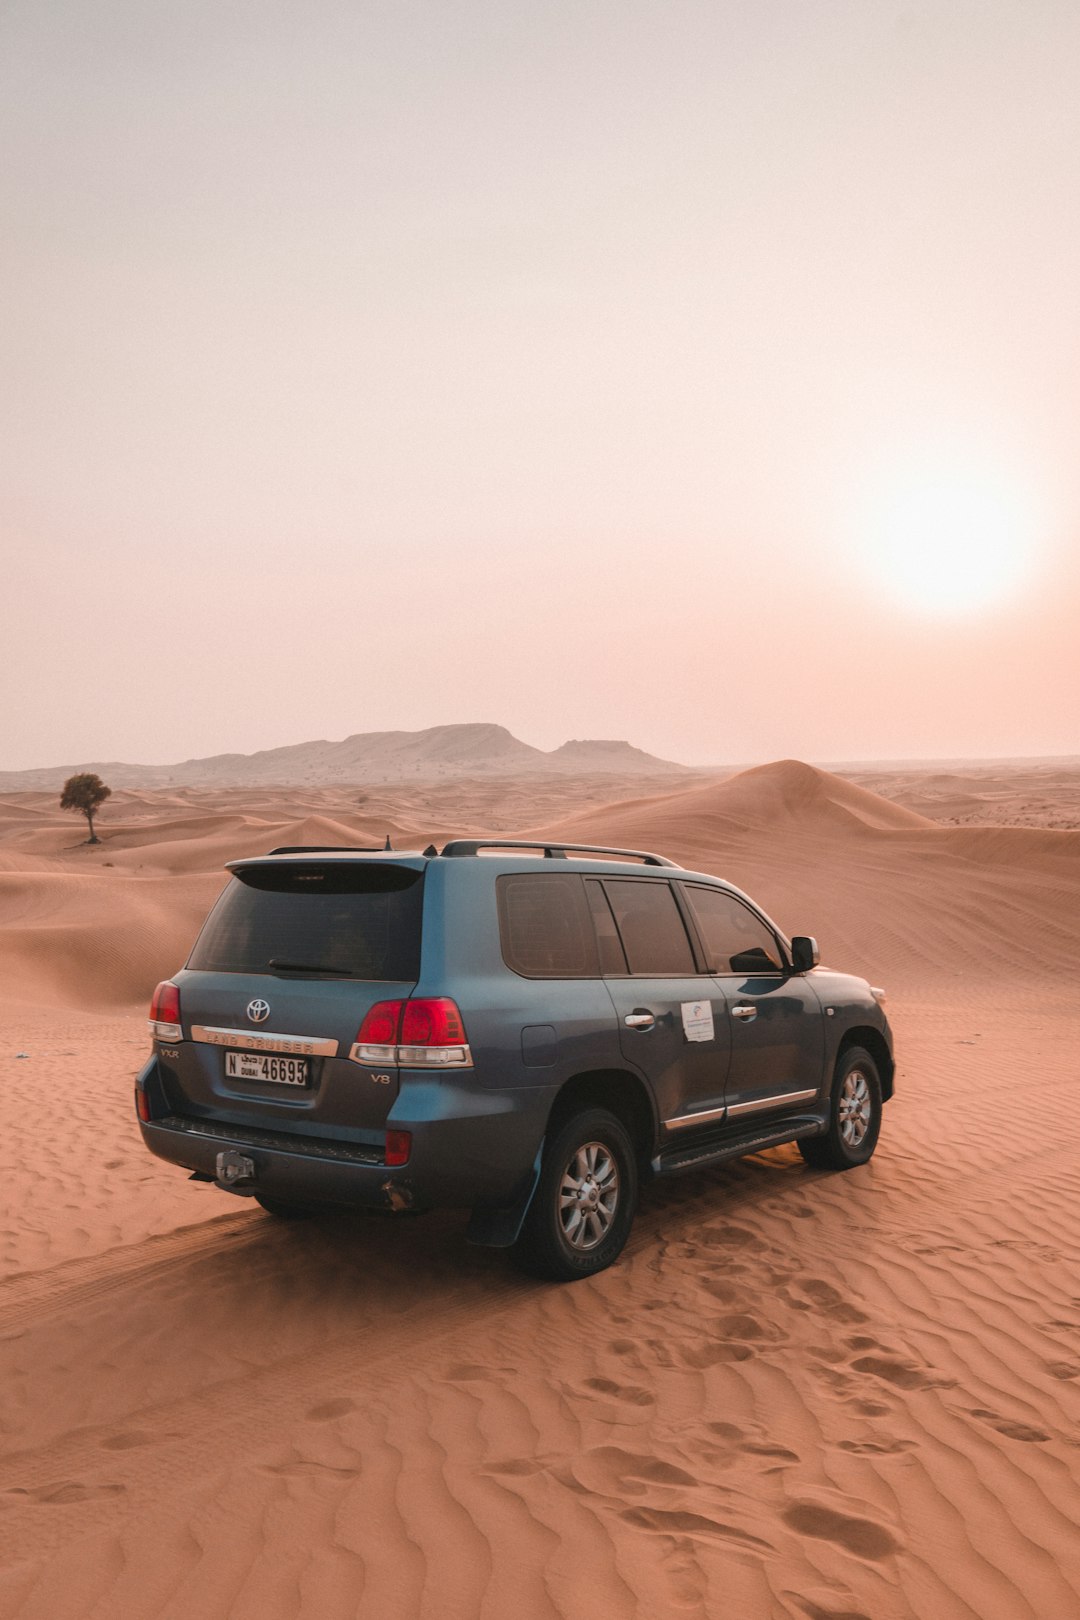 Desert photo spot Dubai - United Arab Emirates Al Khan